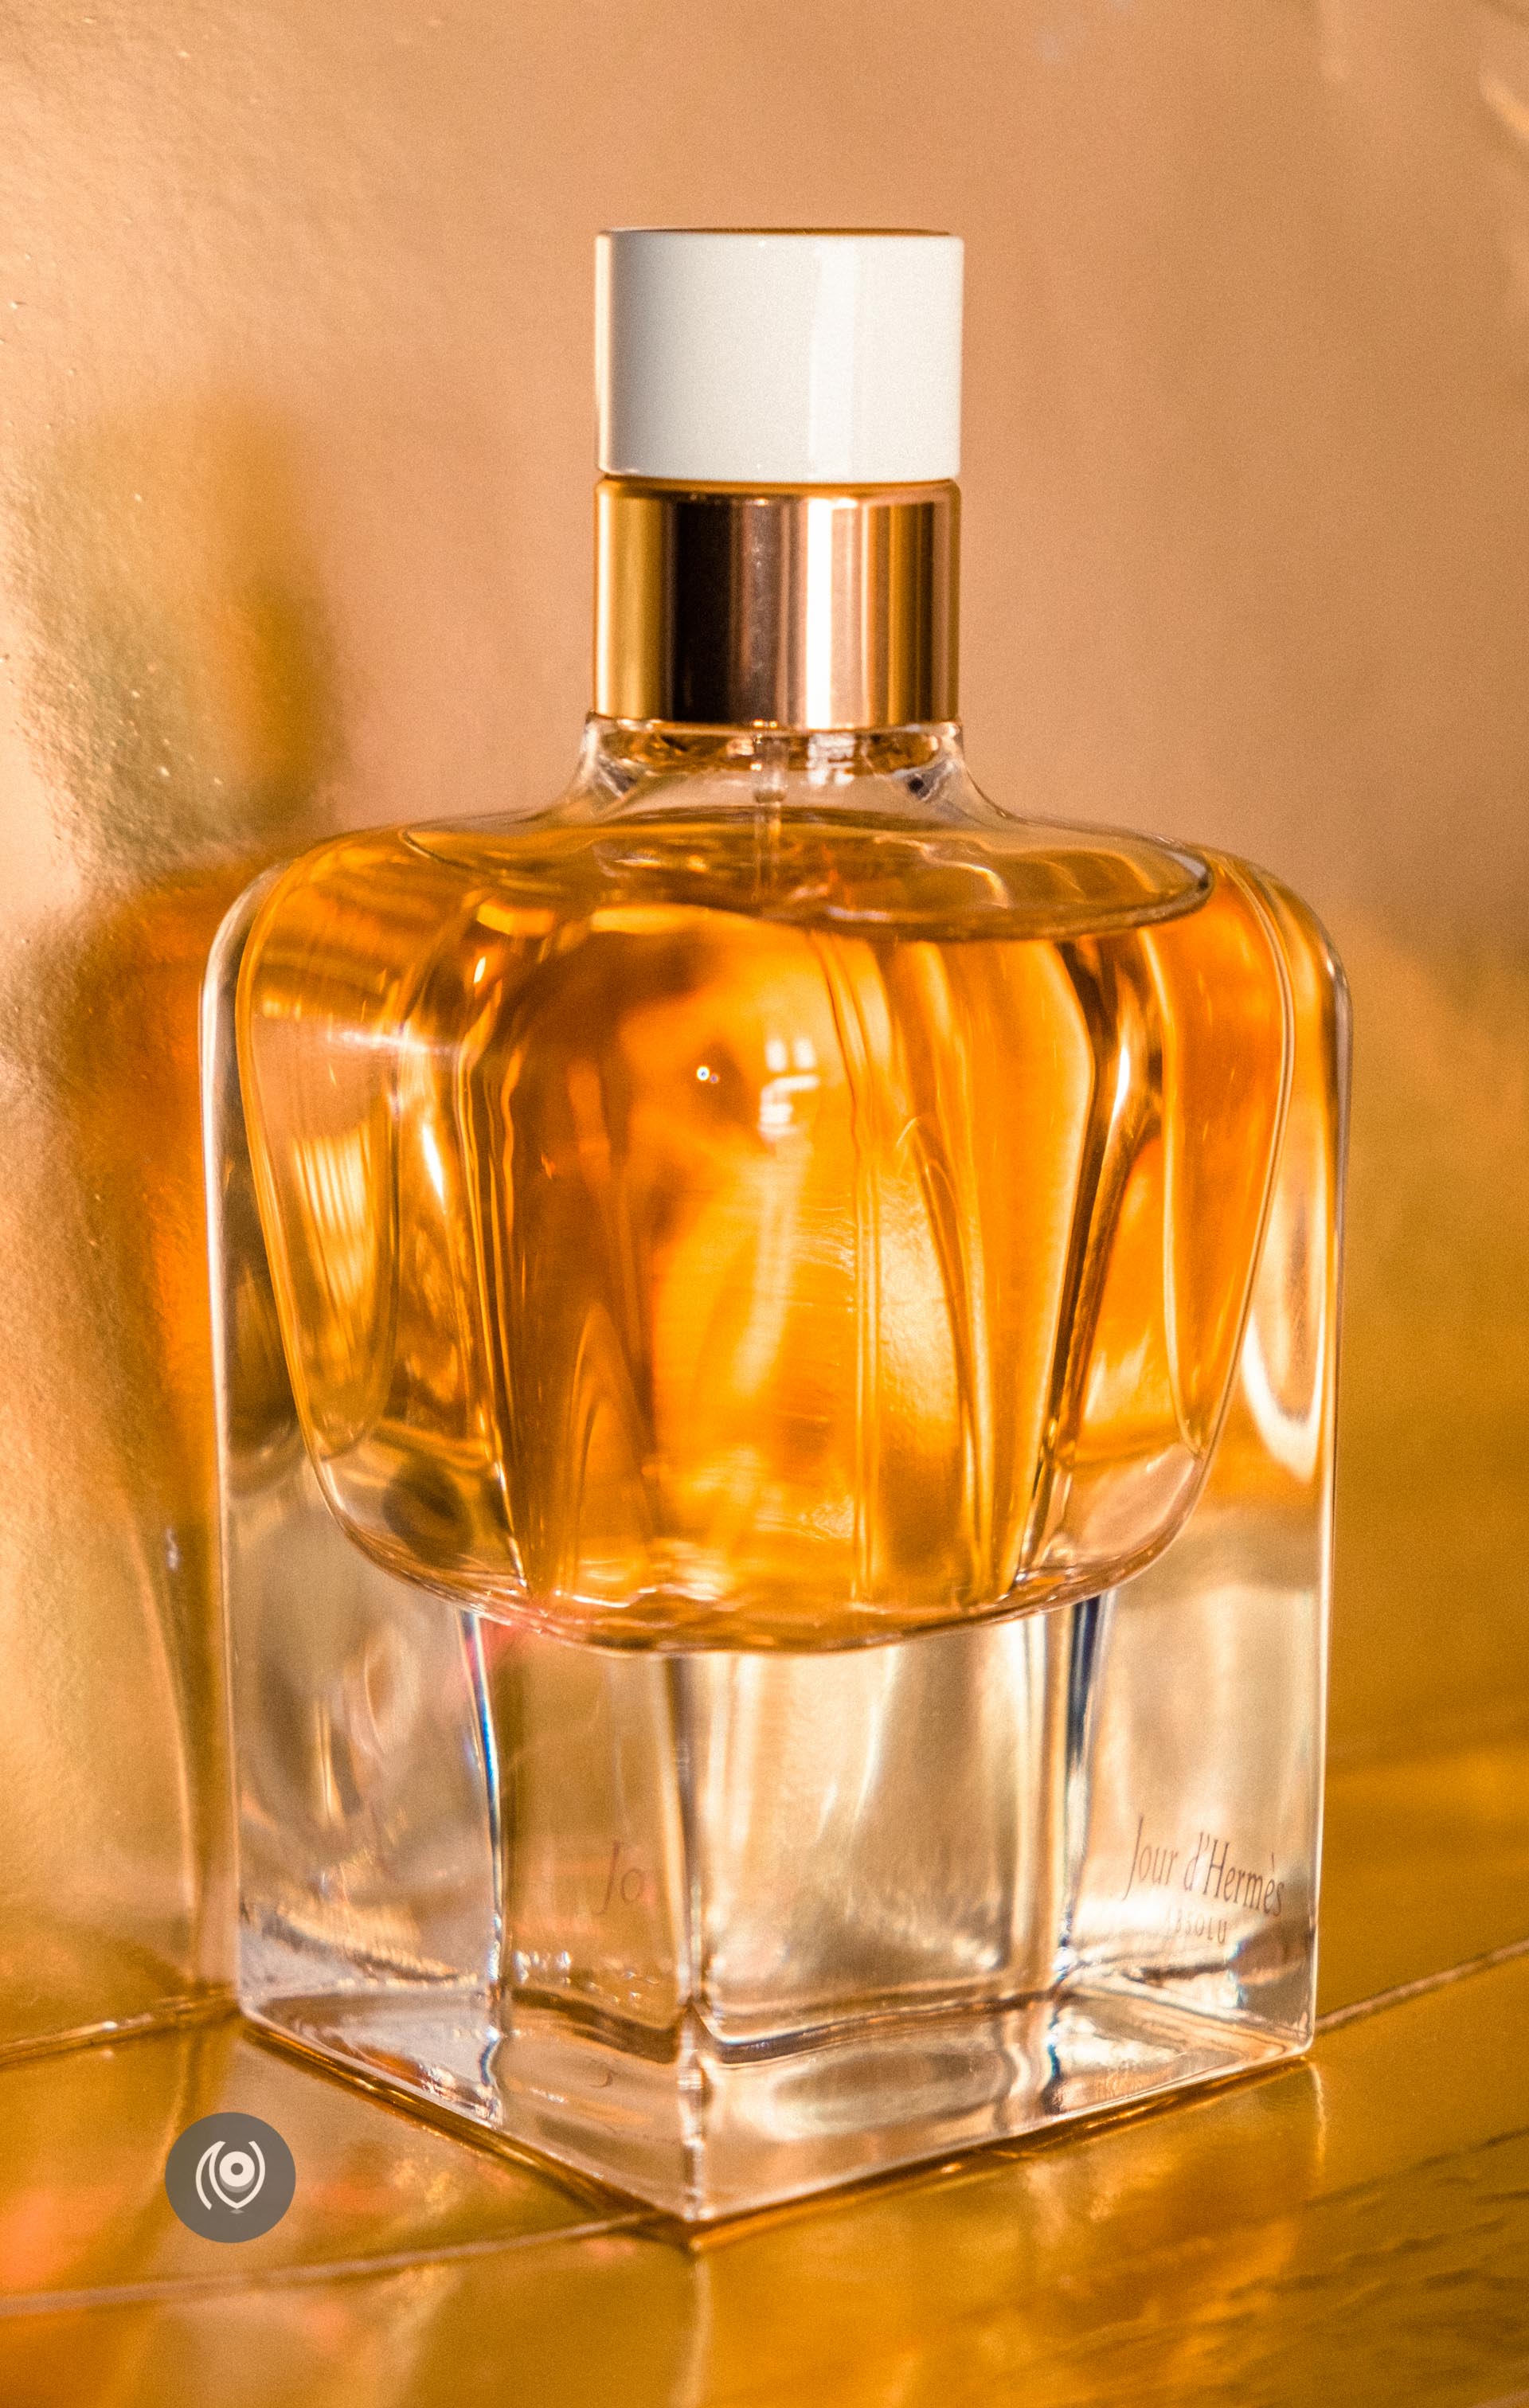 Jour d'Hermes Absolu Parfum #EyesForLuxury Naina.co Luxury & Lifestyle, Photographer, Storyteller, Blogger